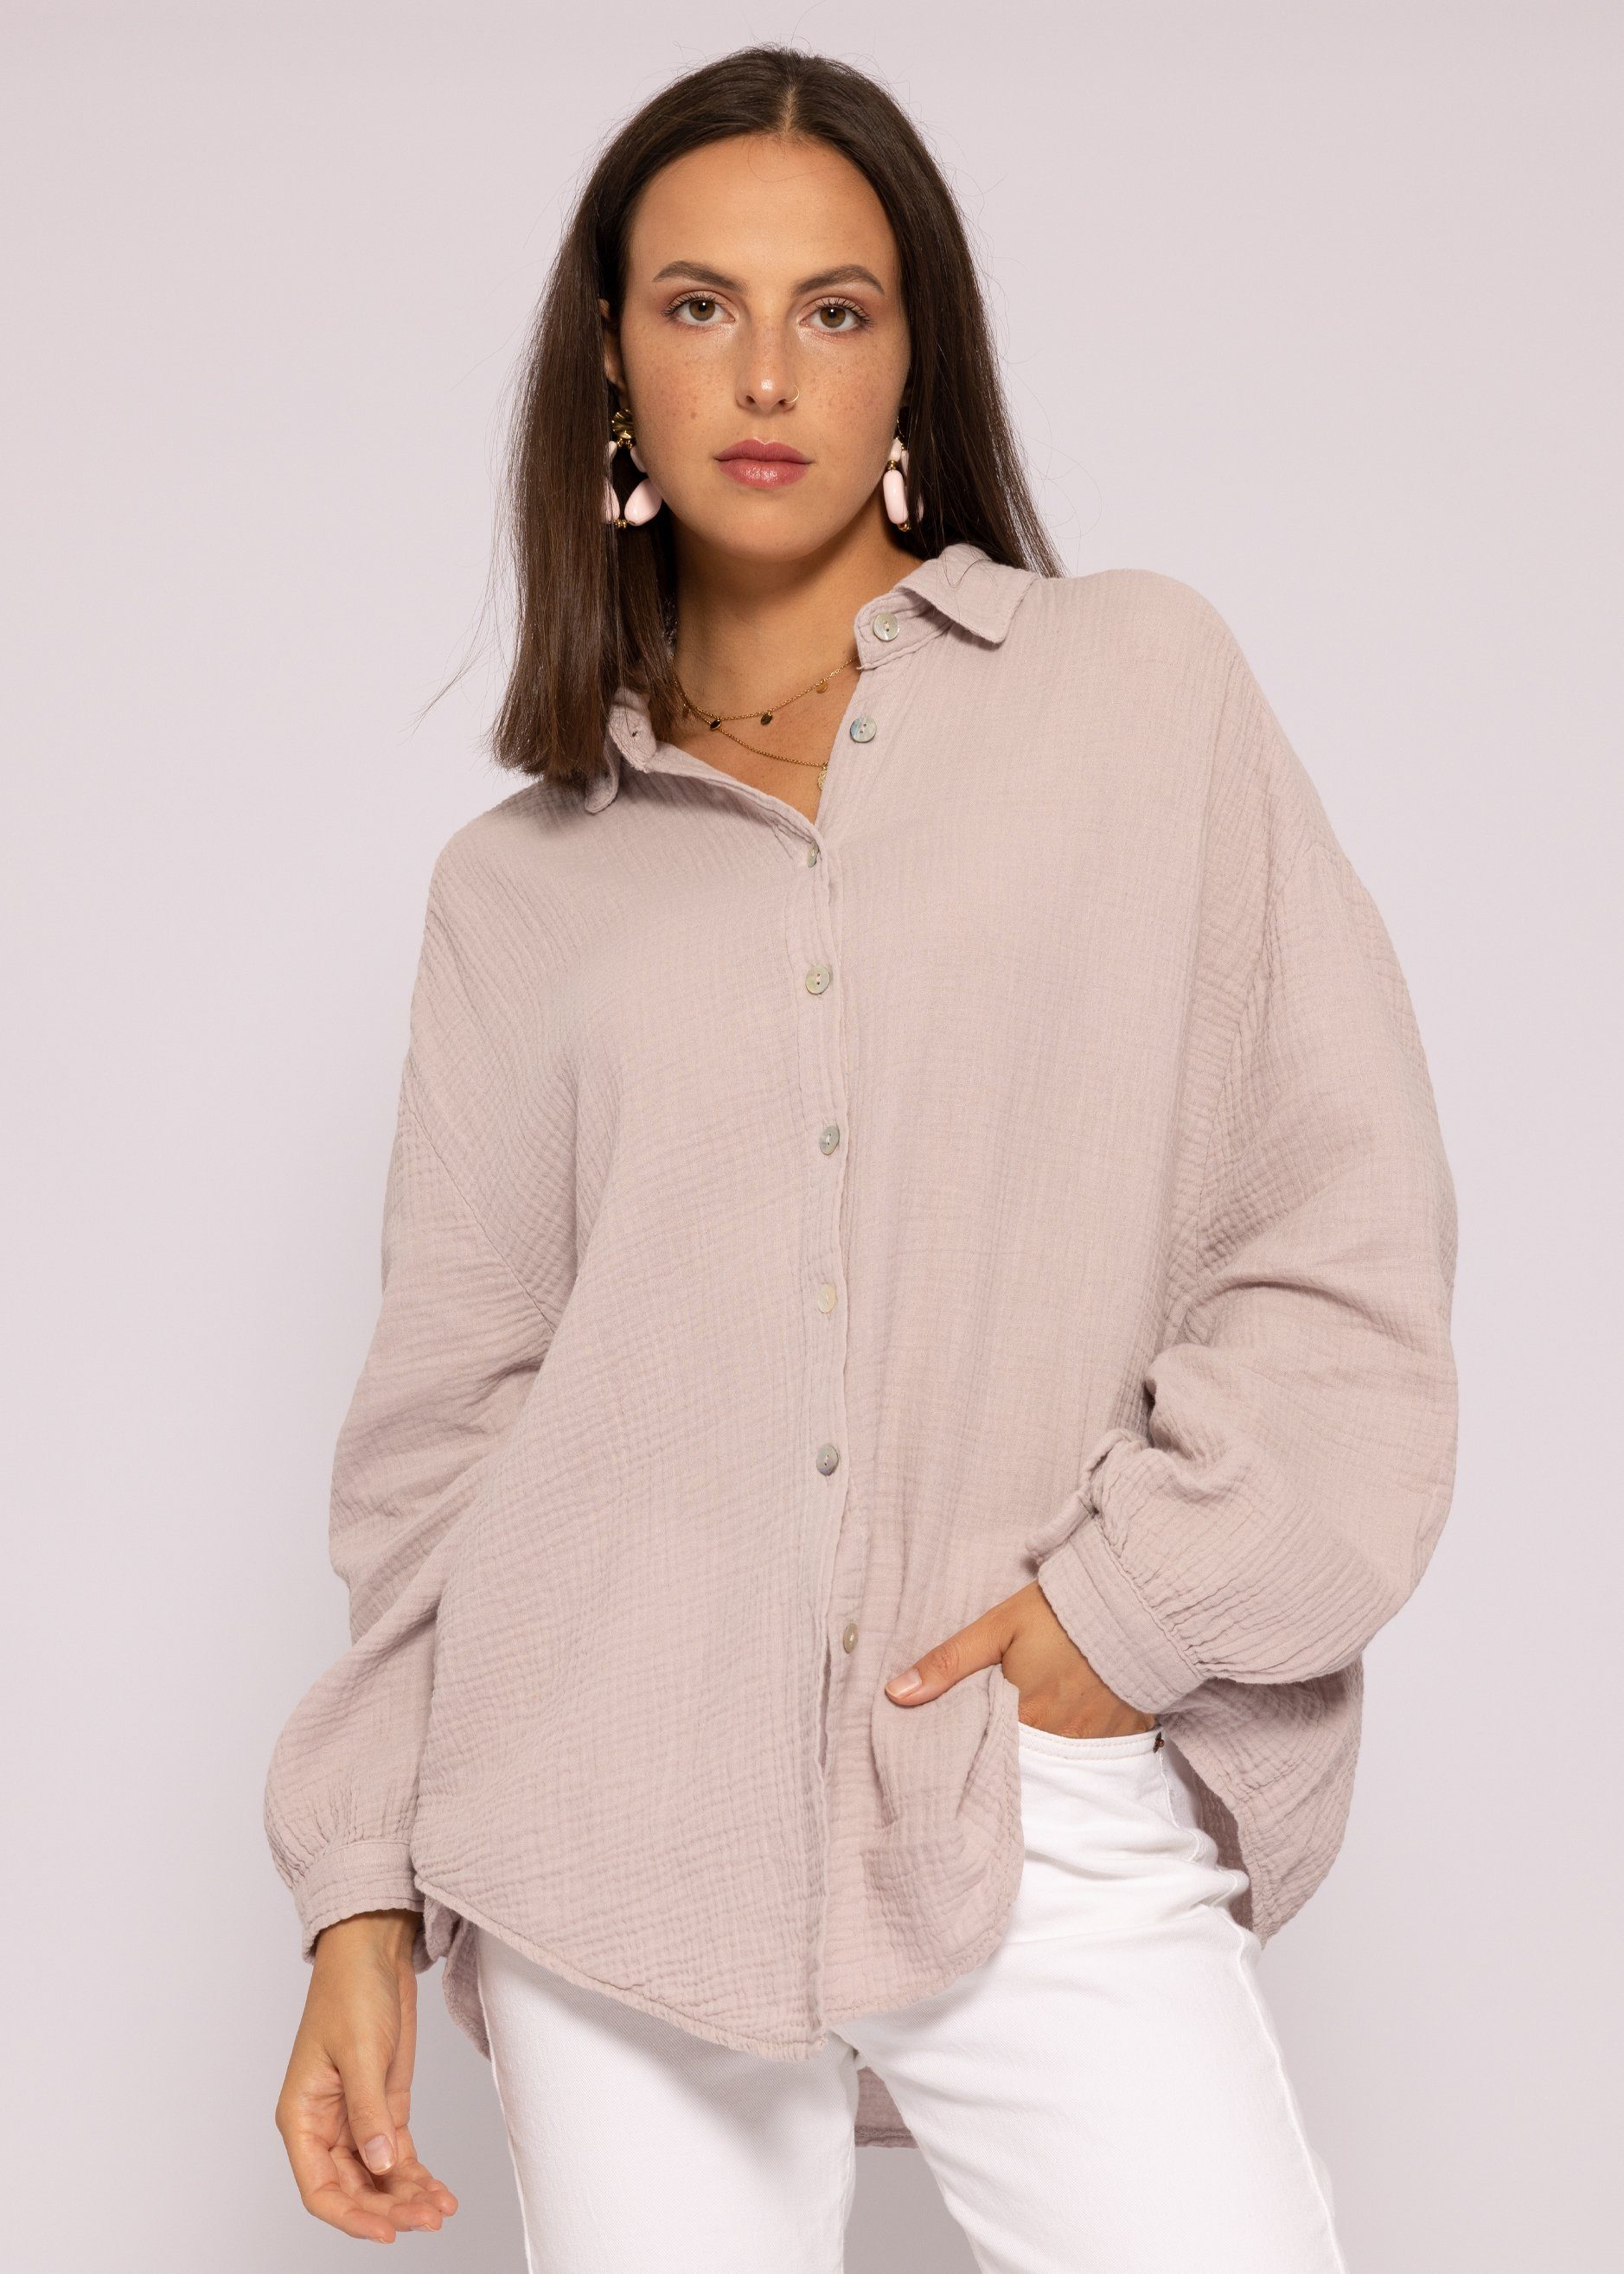 SASSYCLASSY Longbluse Oversize Musselin Bluse Damen Langarm Hemdbluse lang  aus Baumwolle mit V-Ausschnitt